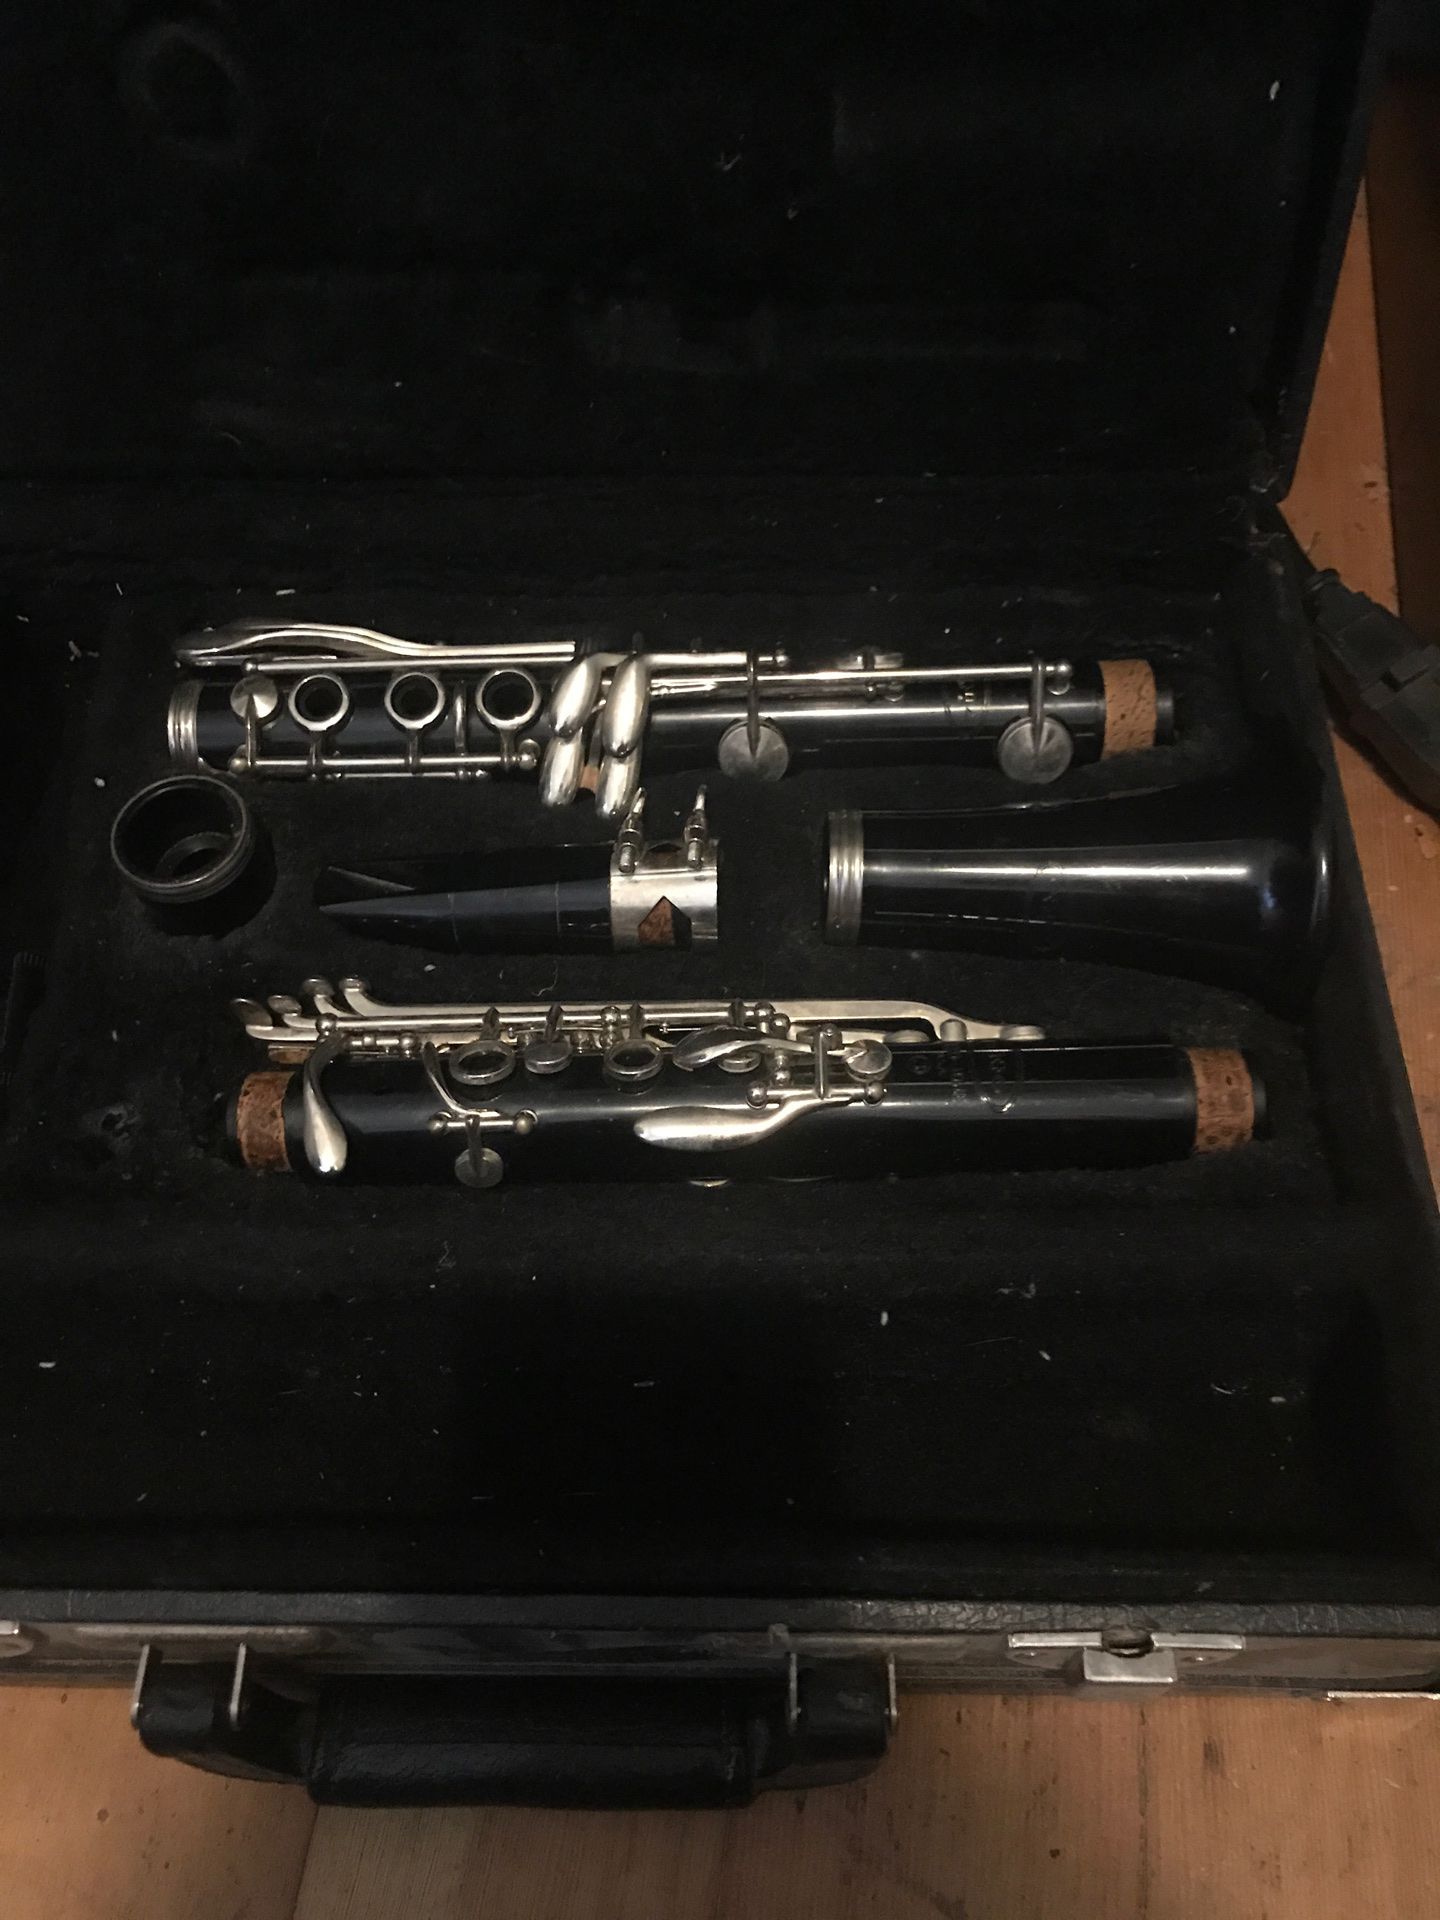 Vito Reso-tone 3 clarinet